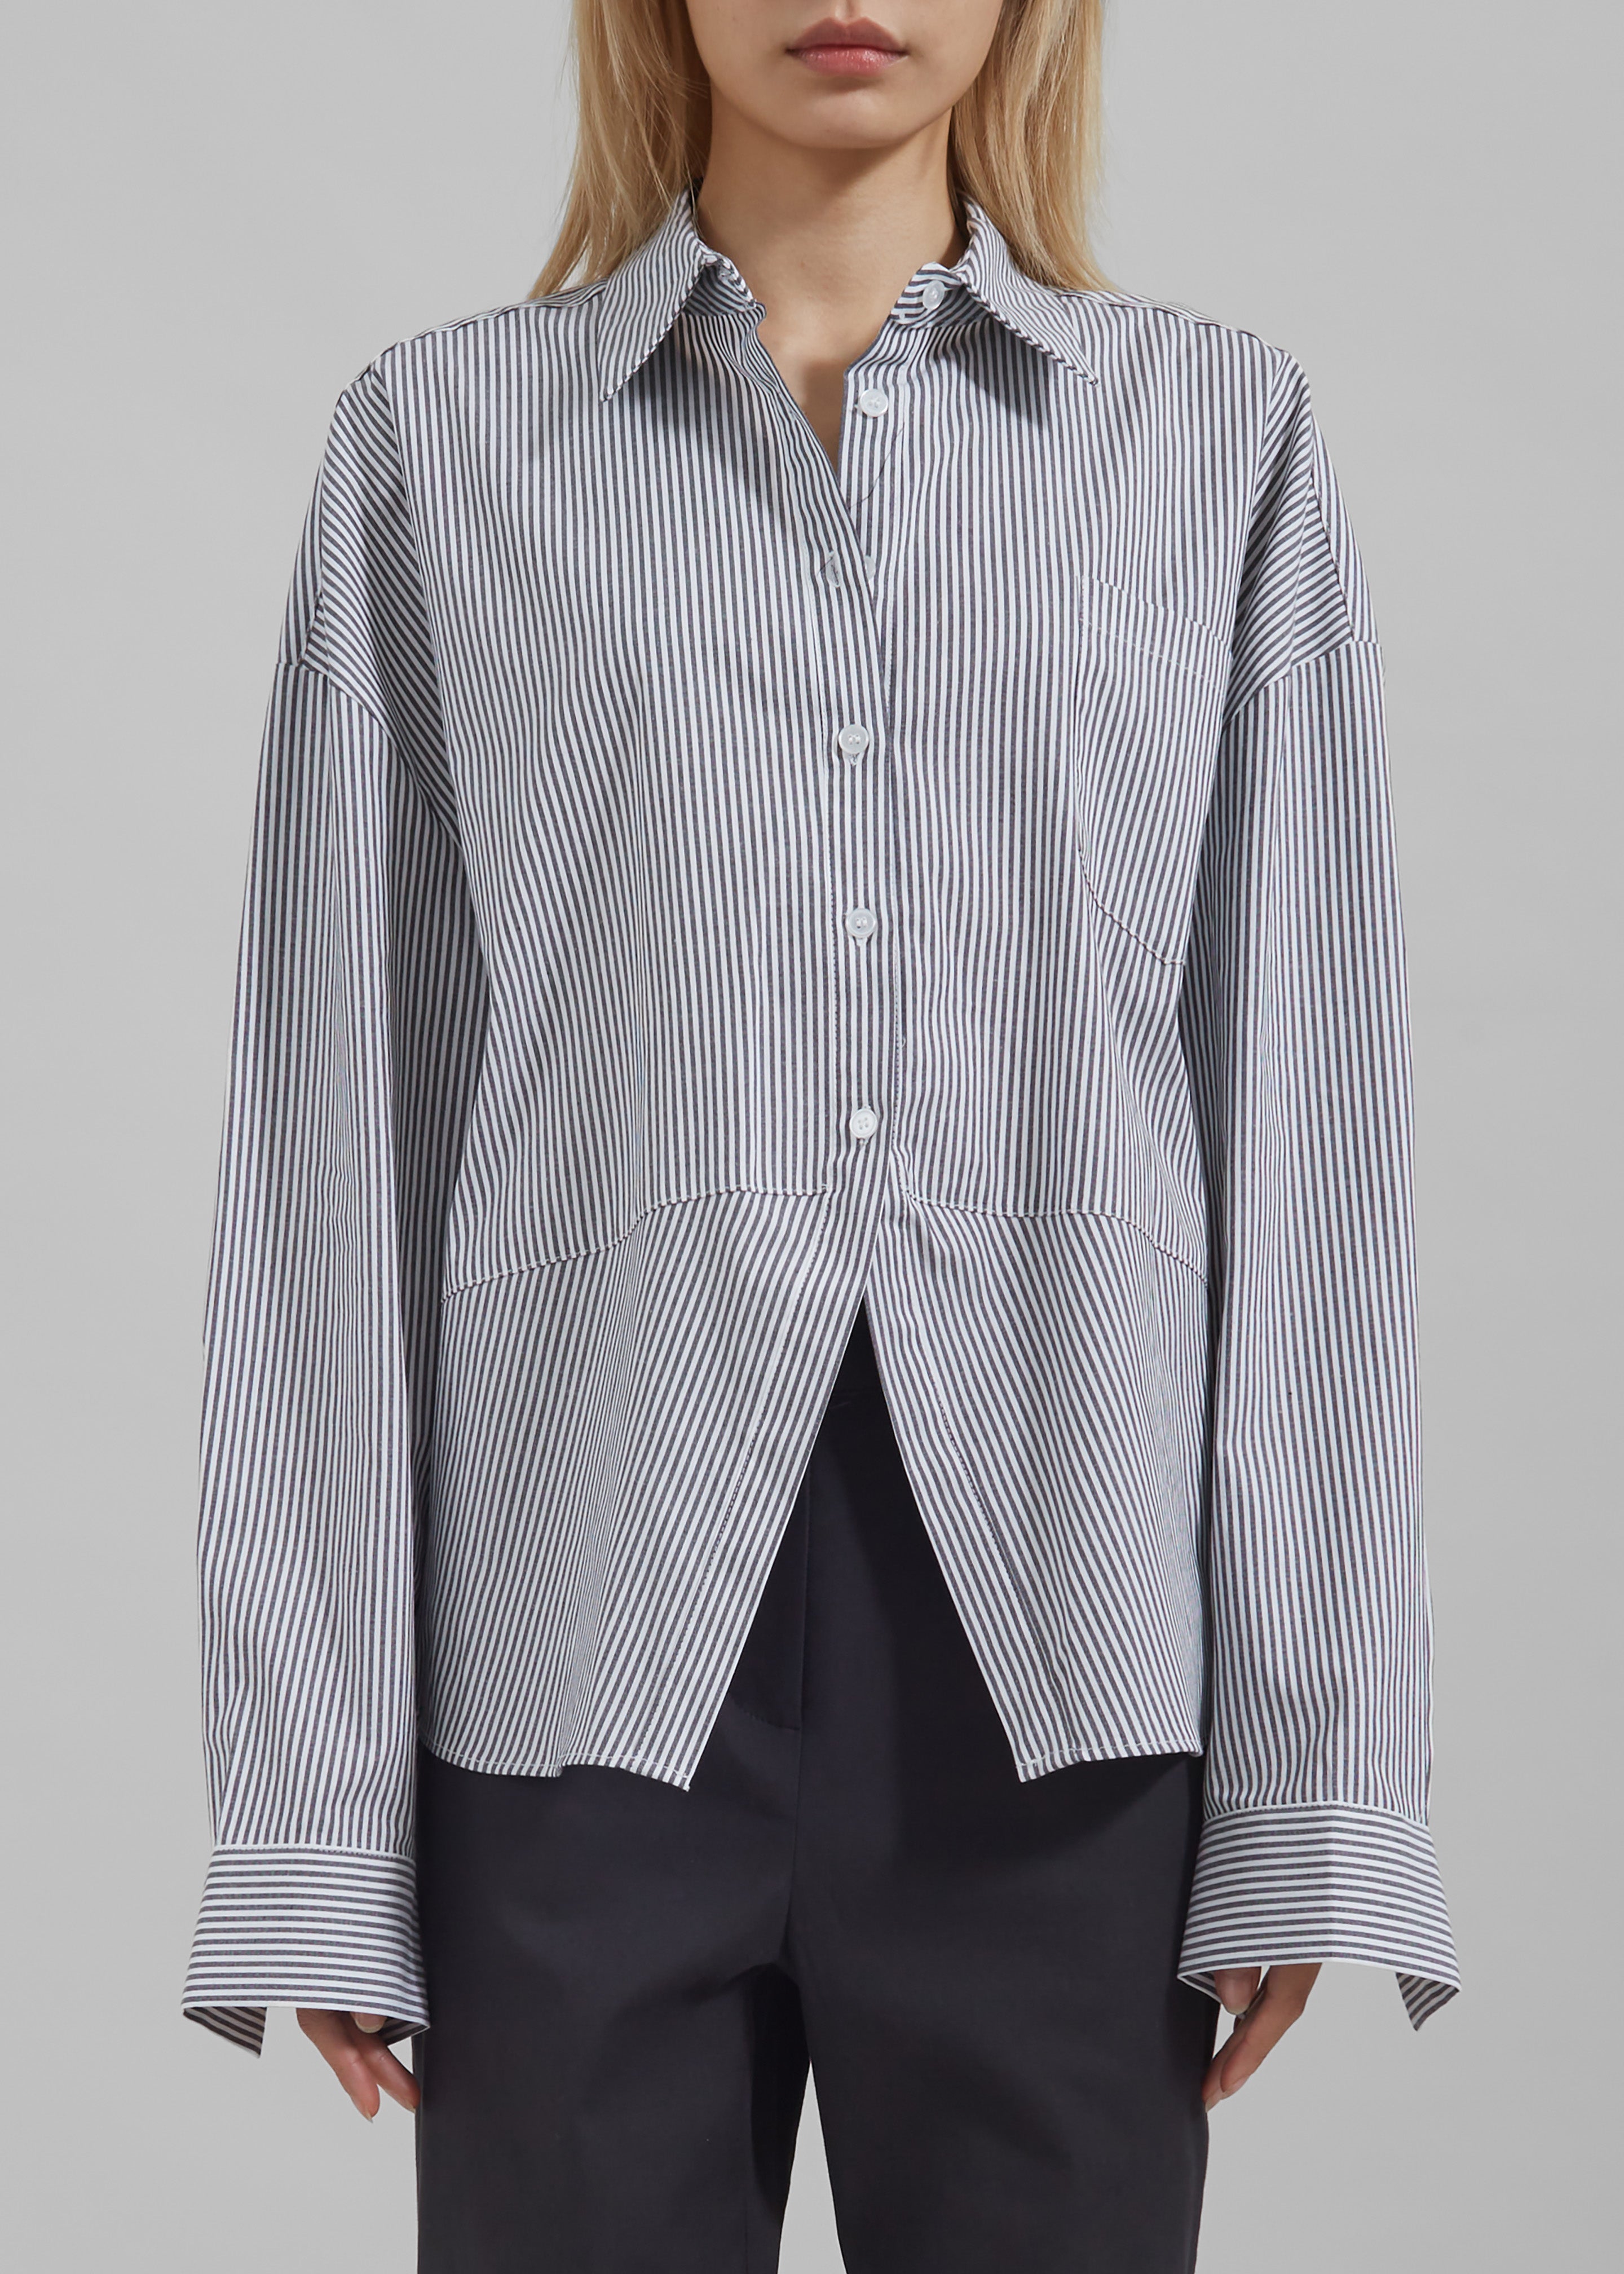 Liv Button Up Shirt - Black/White Stripe - 5